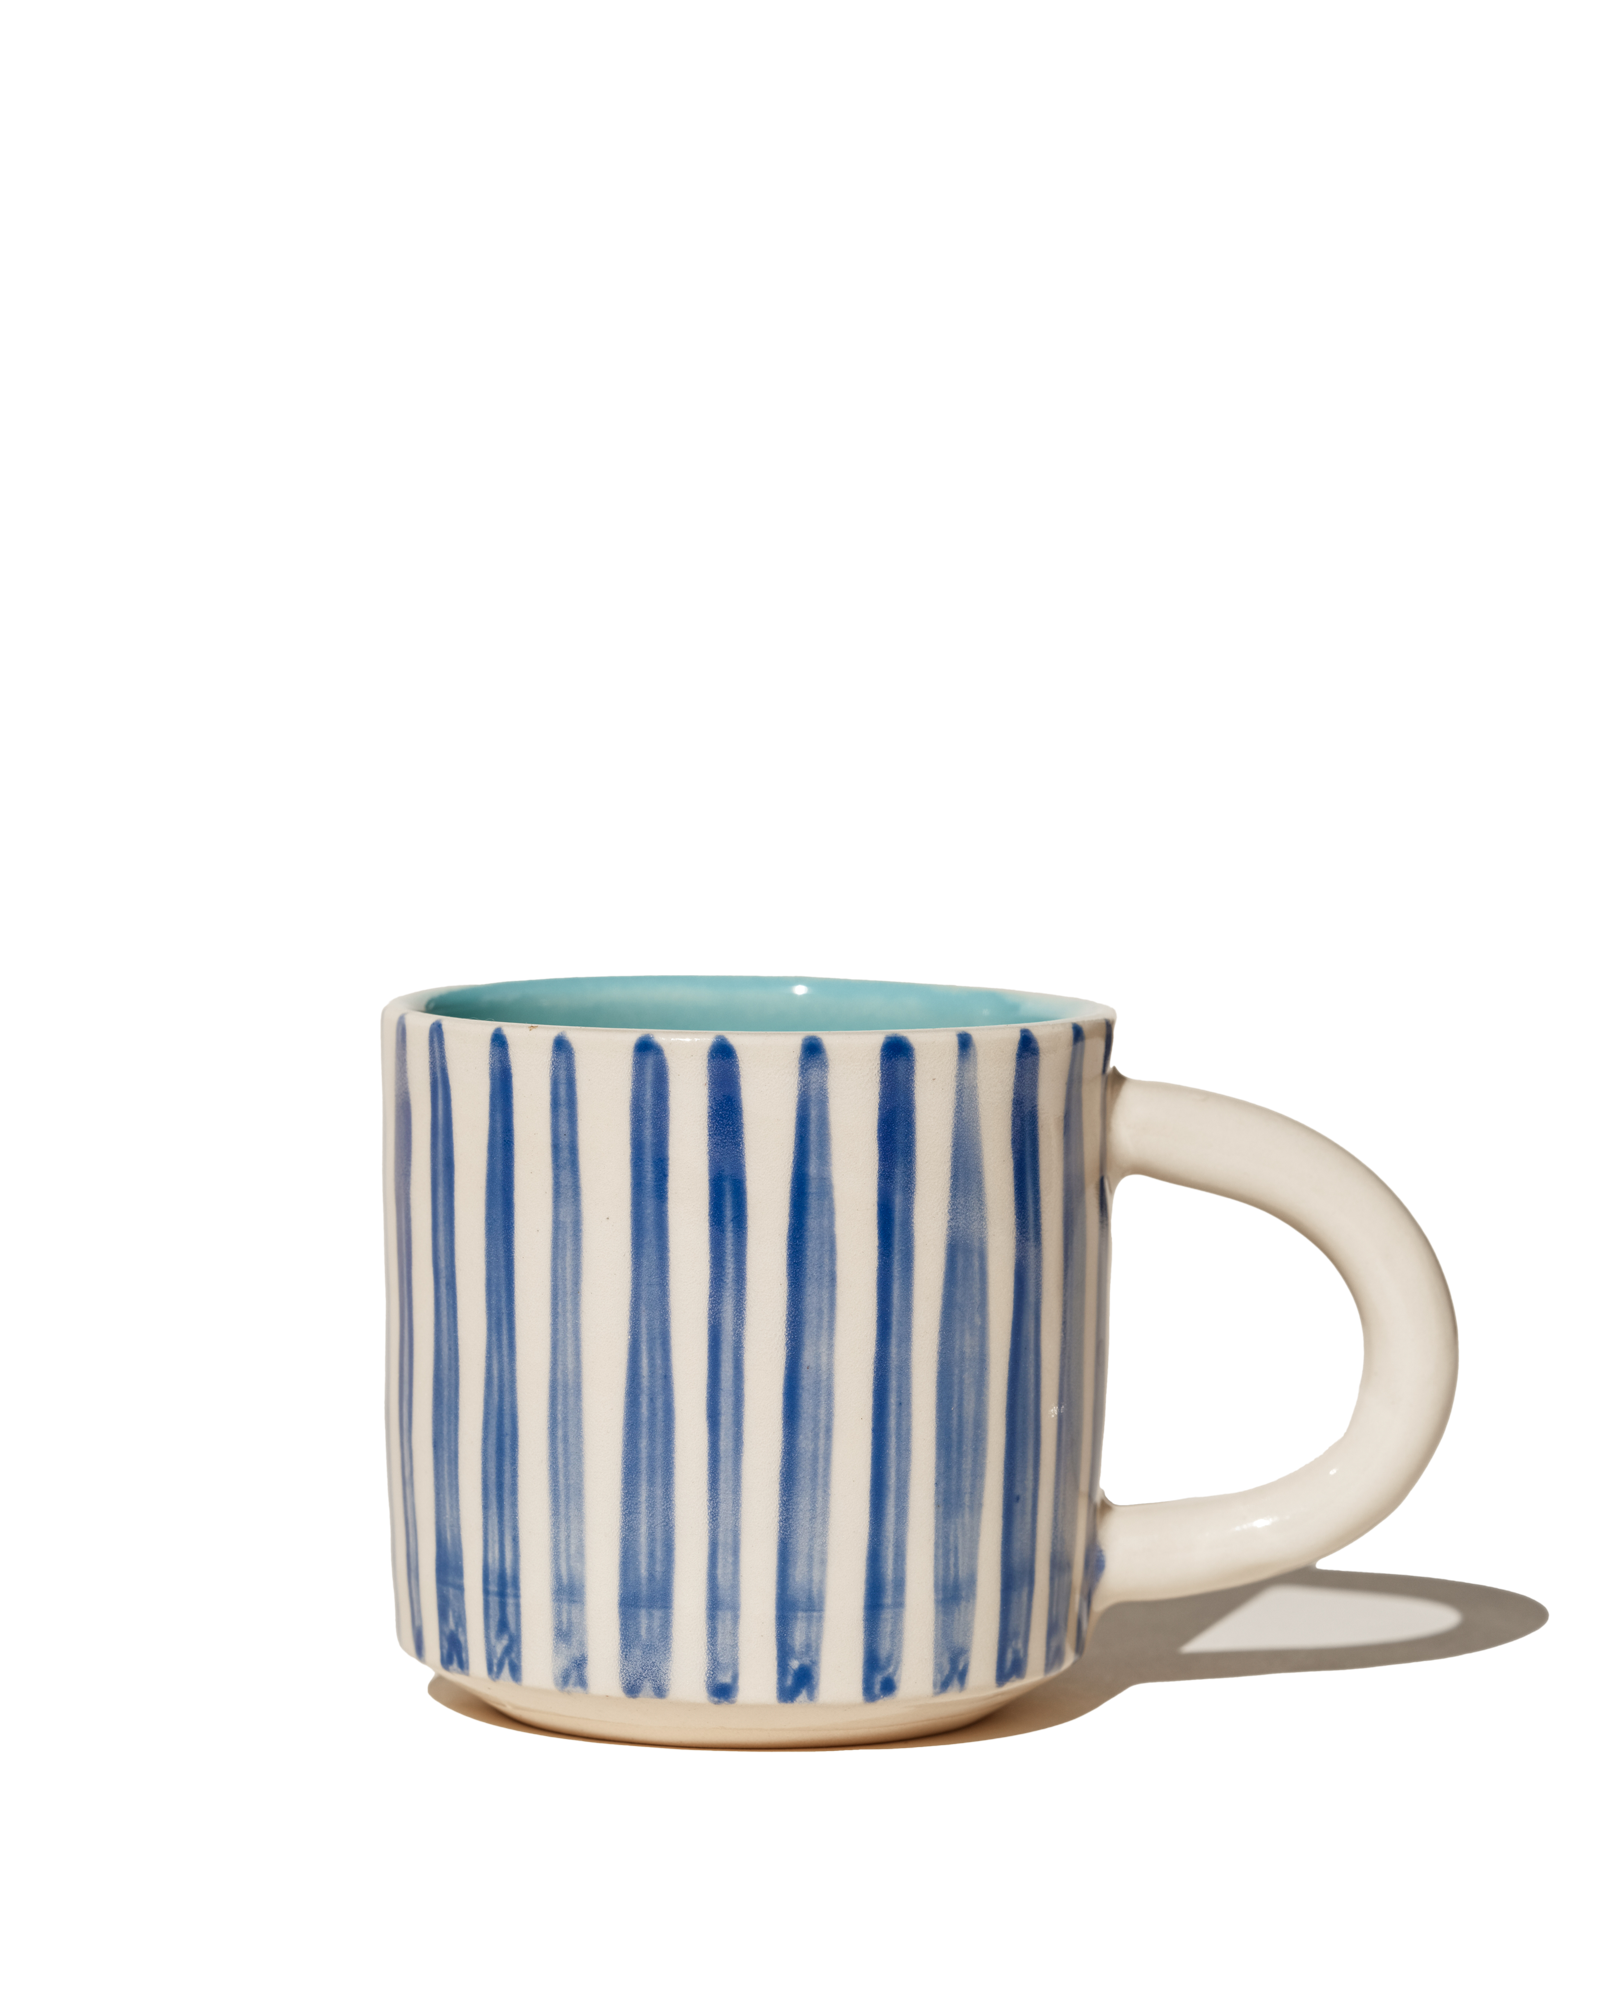 Blue Striped Mug by Pala Ceramics